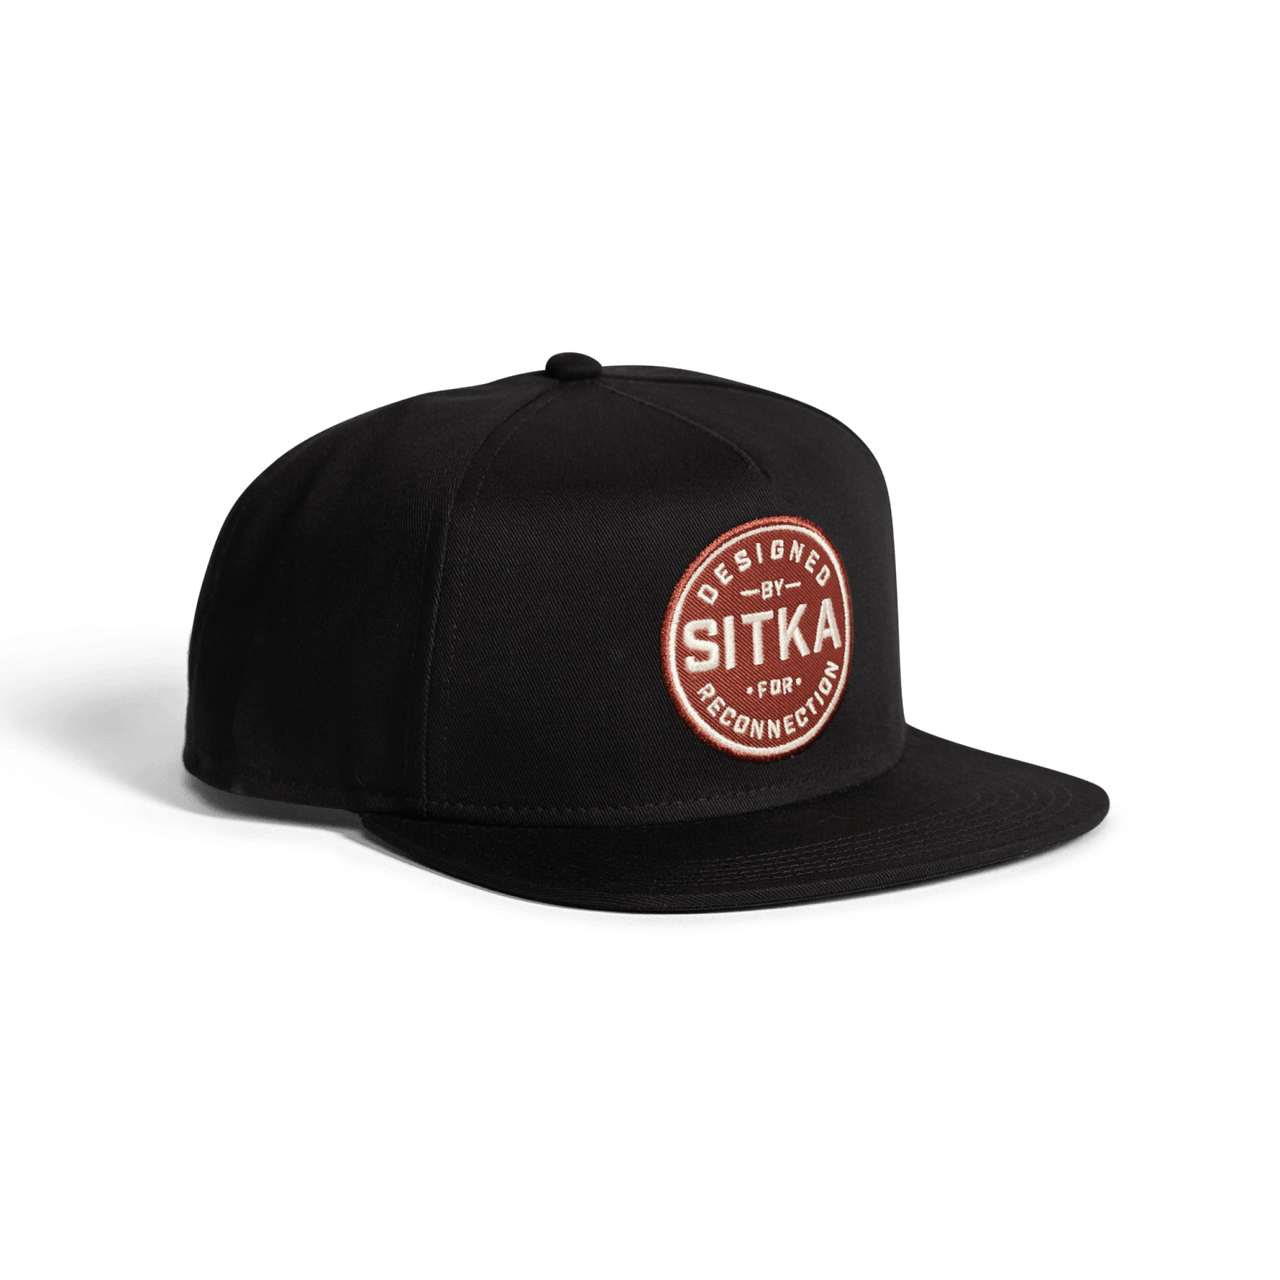 Sitka Reconnection Hi Pro Snapback Hat